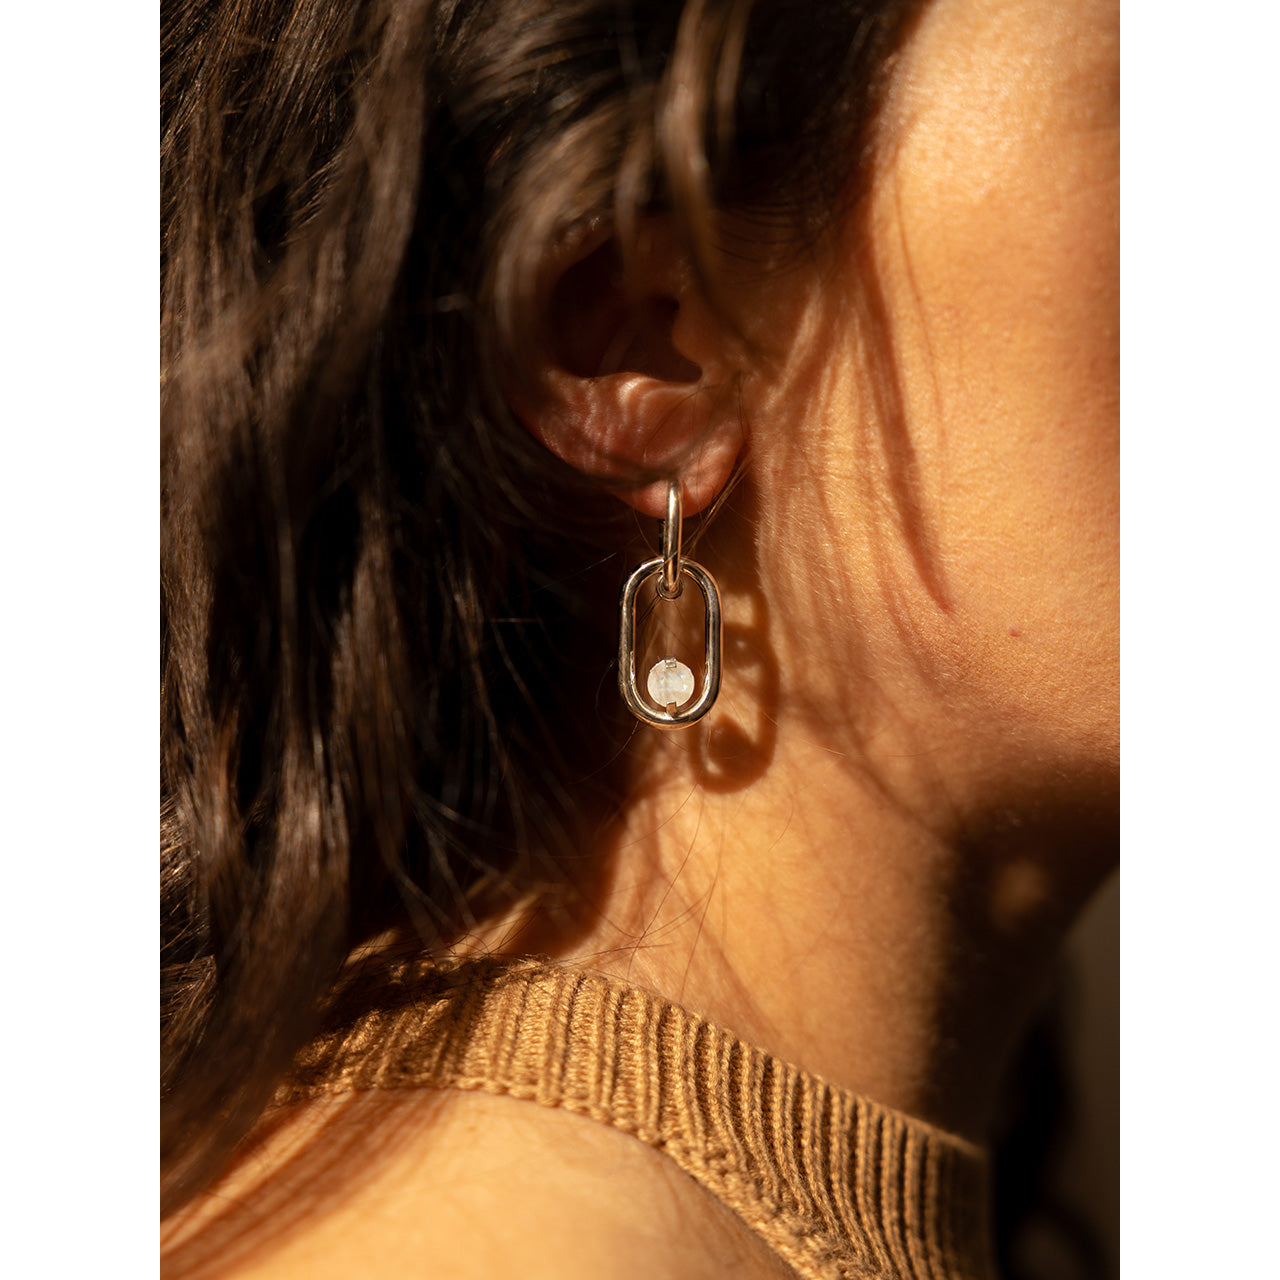 Two of A Kind earrings - Hannah